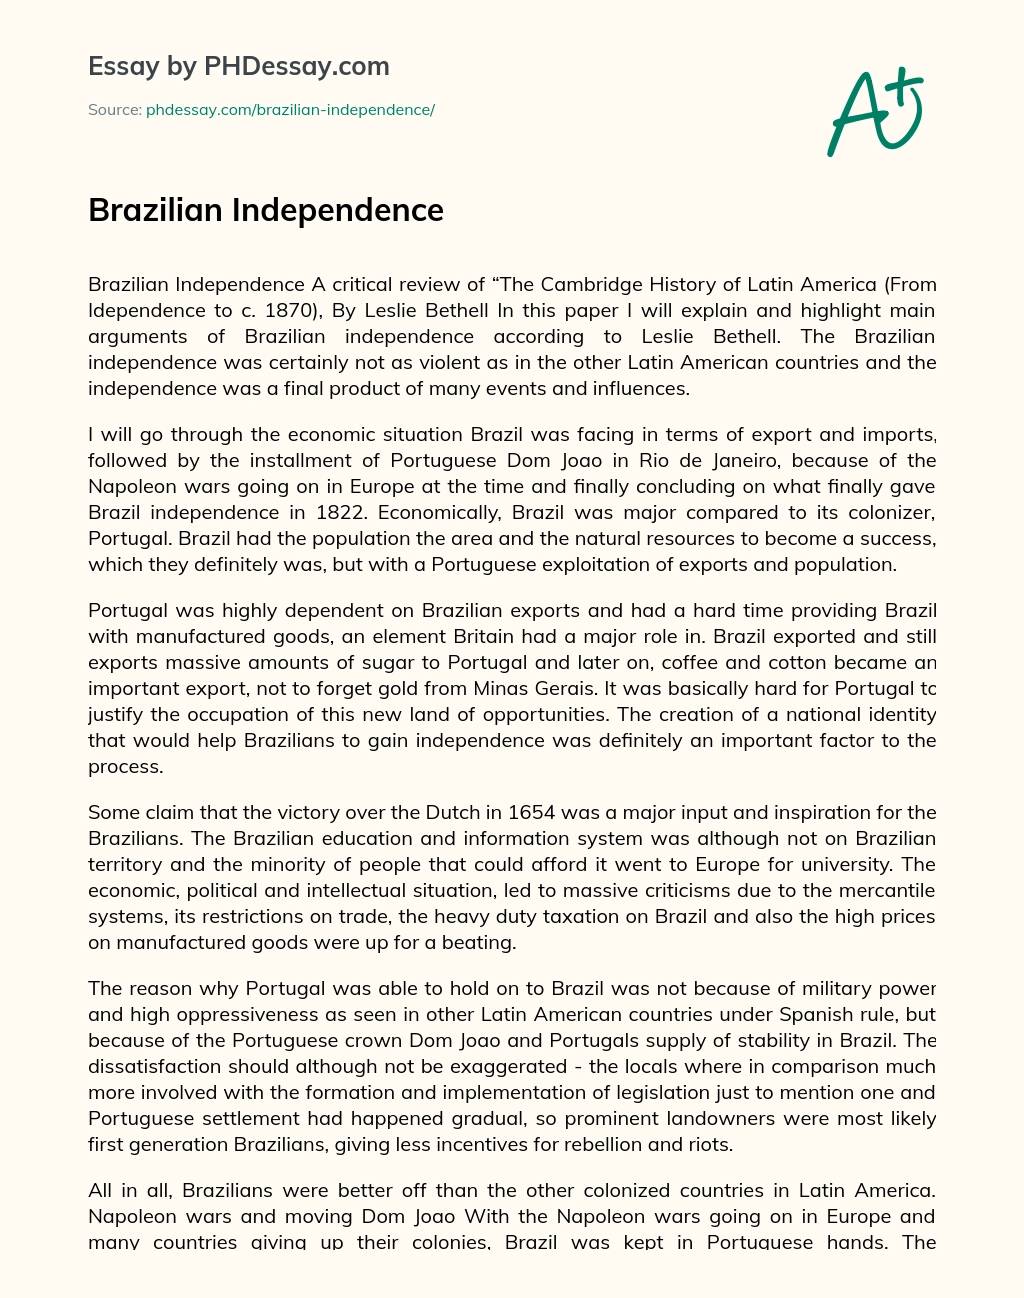 Brazilian Independence essay